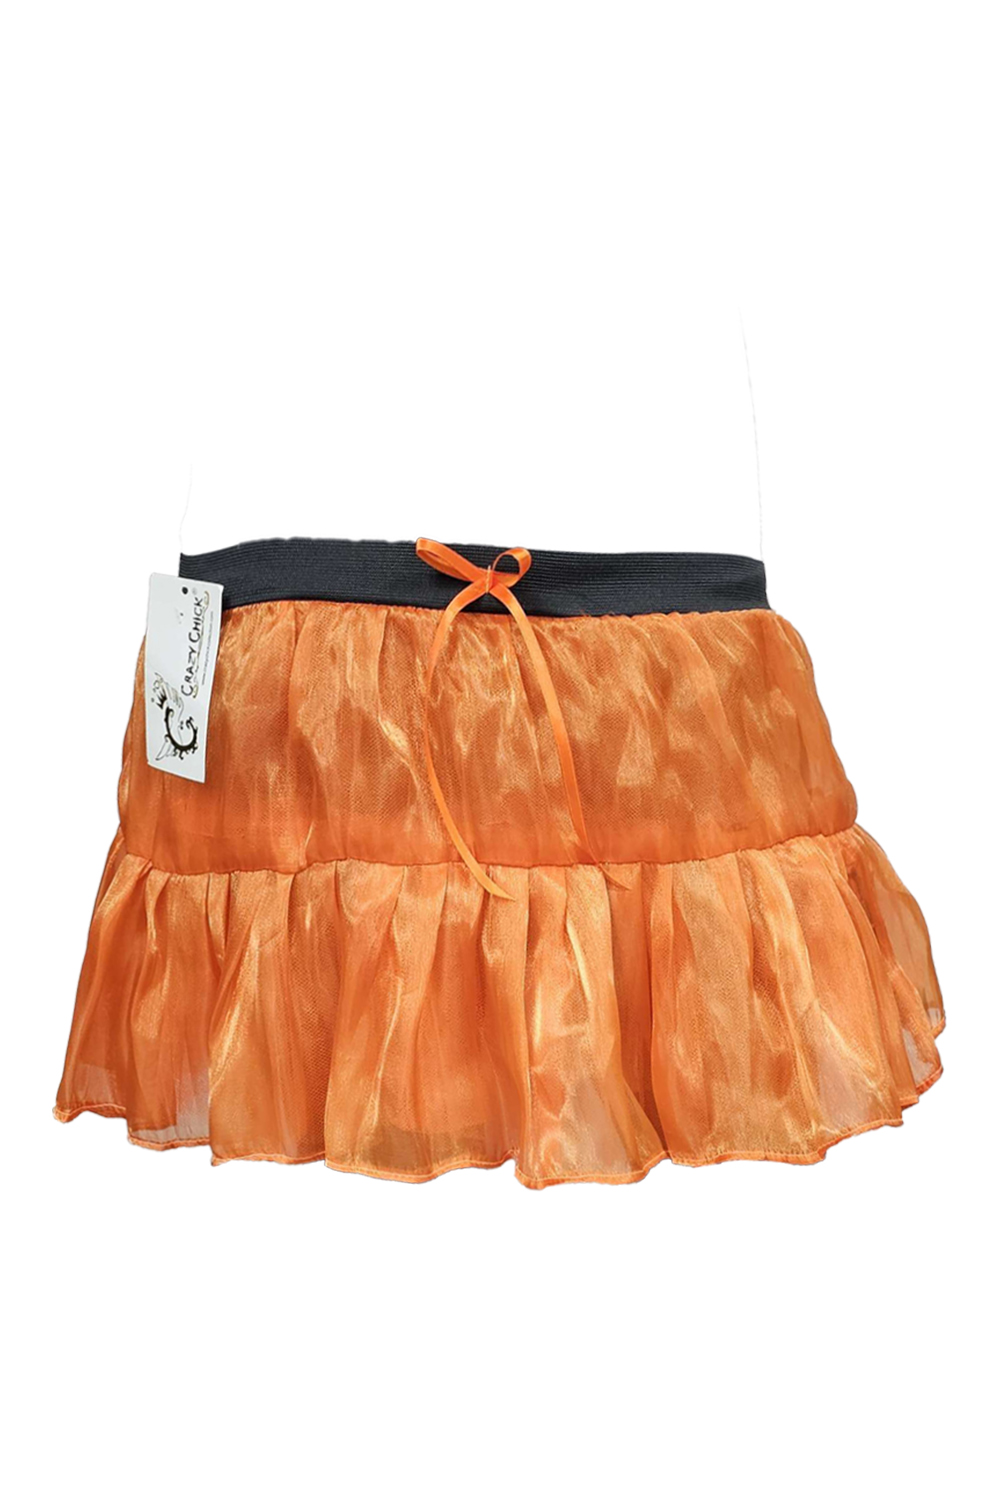 Crazy Chick Adult 2 Layer Orange Satin Tutu Skirt